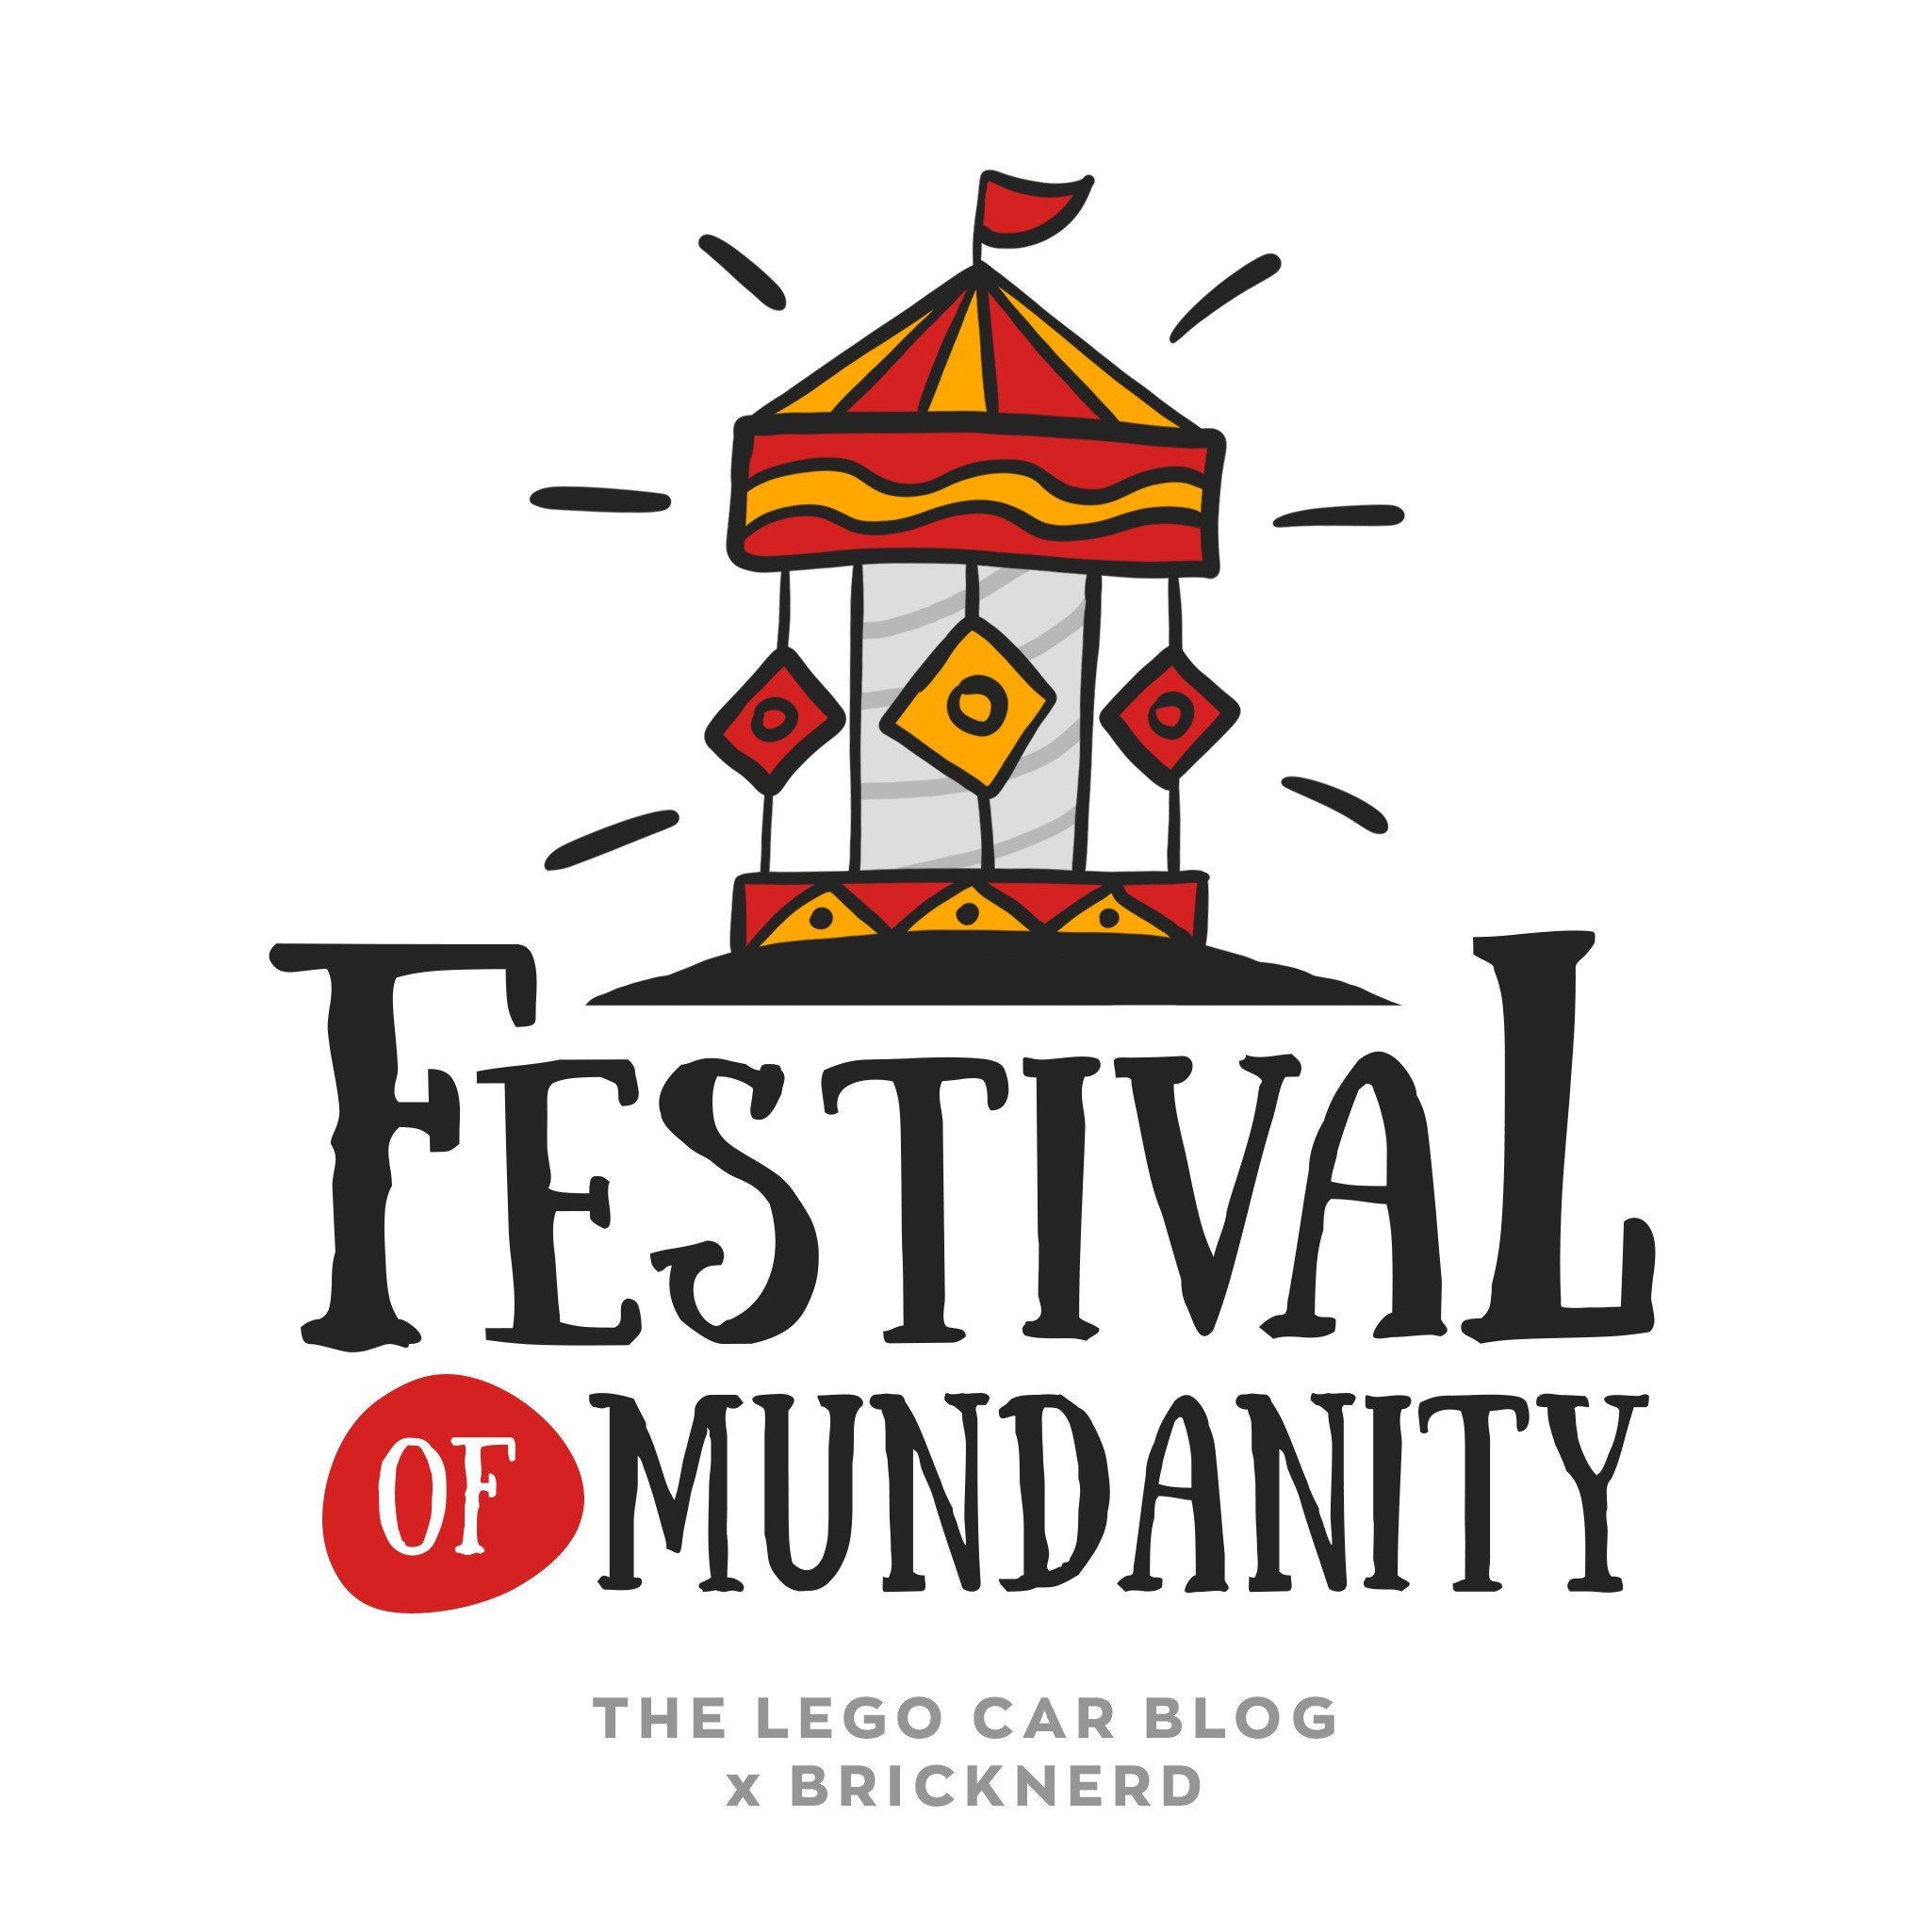 Festival+of+Mundanity+-+BrickNerd+-+Square.jpg